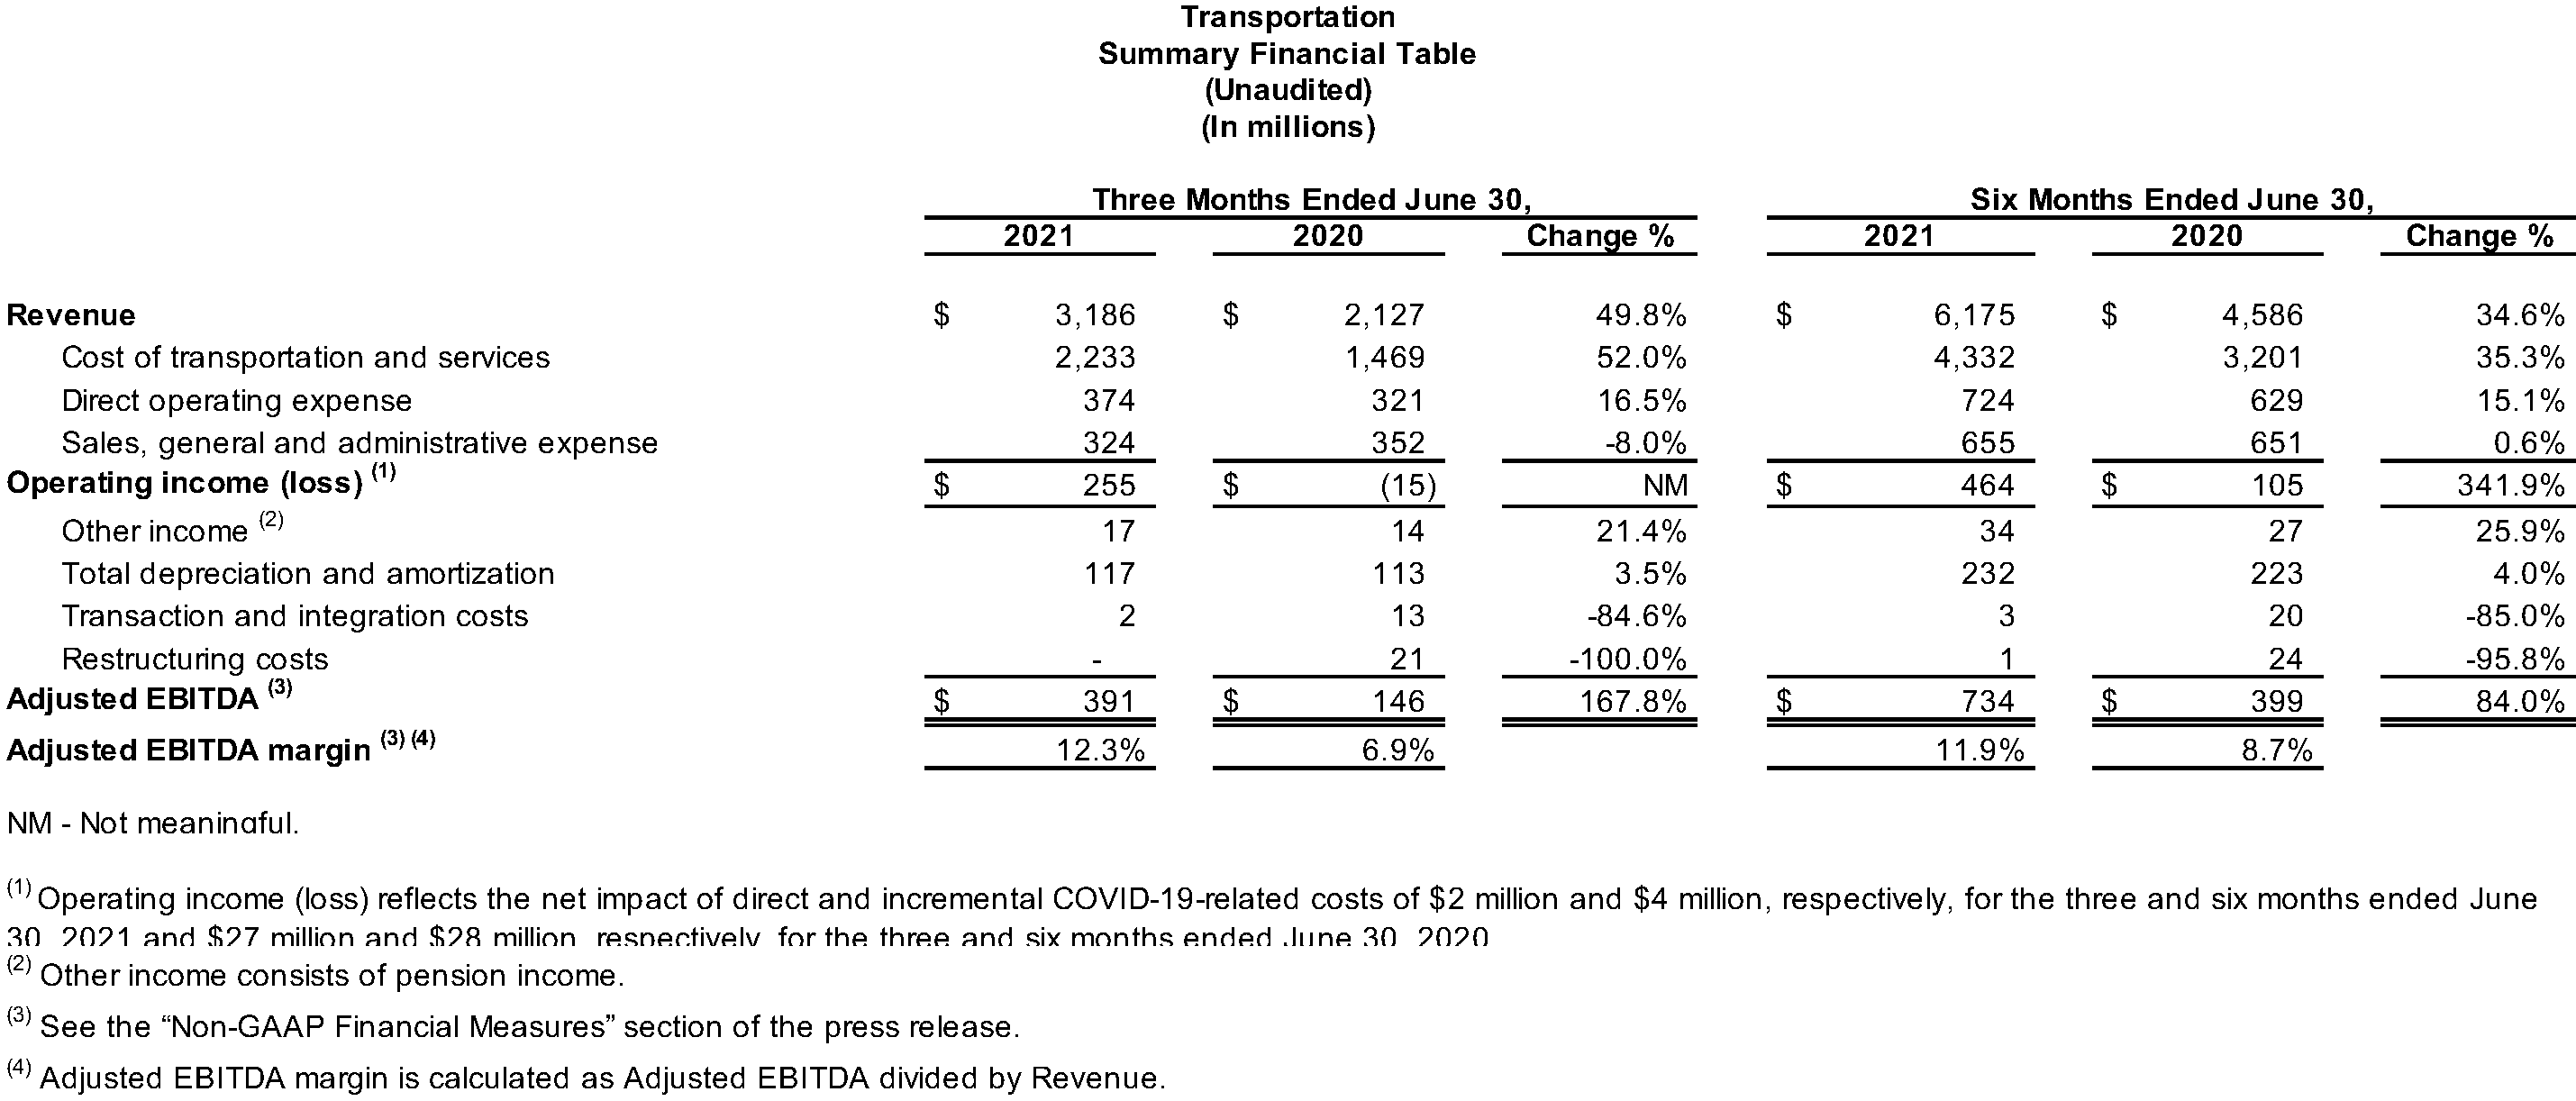 Transportation Summary Financial Table (Unaudited)